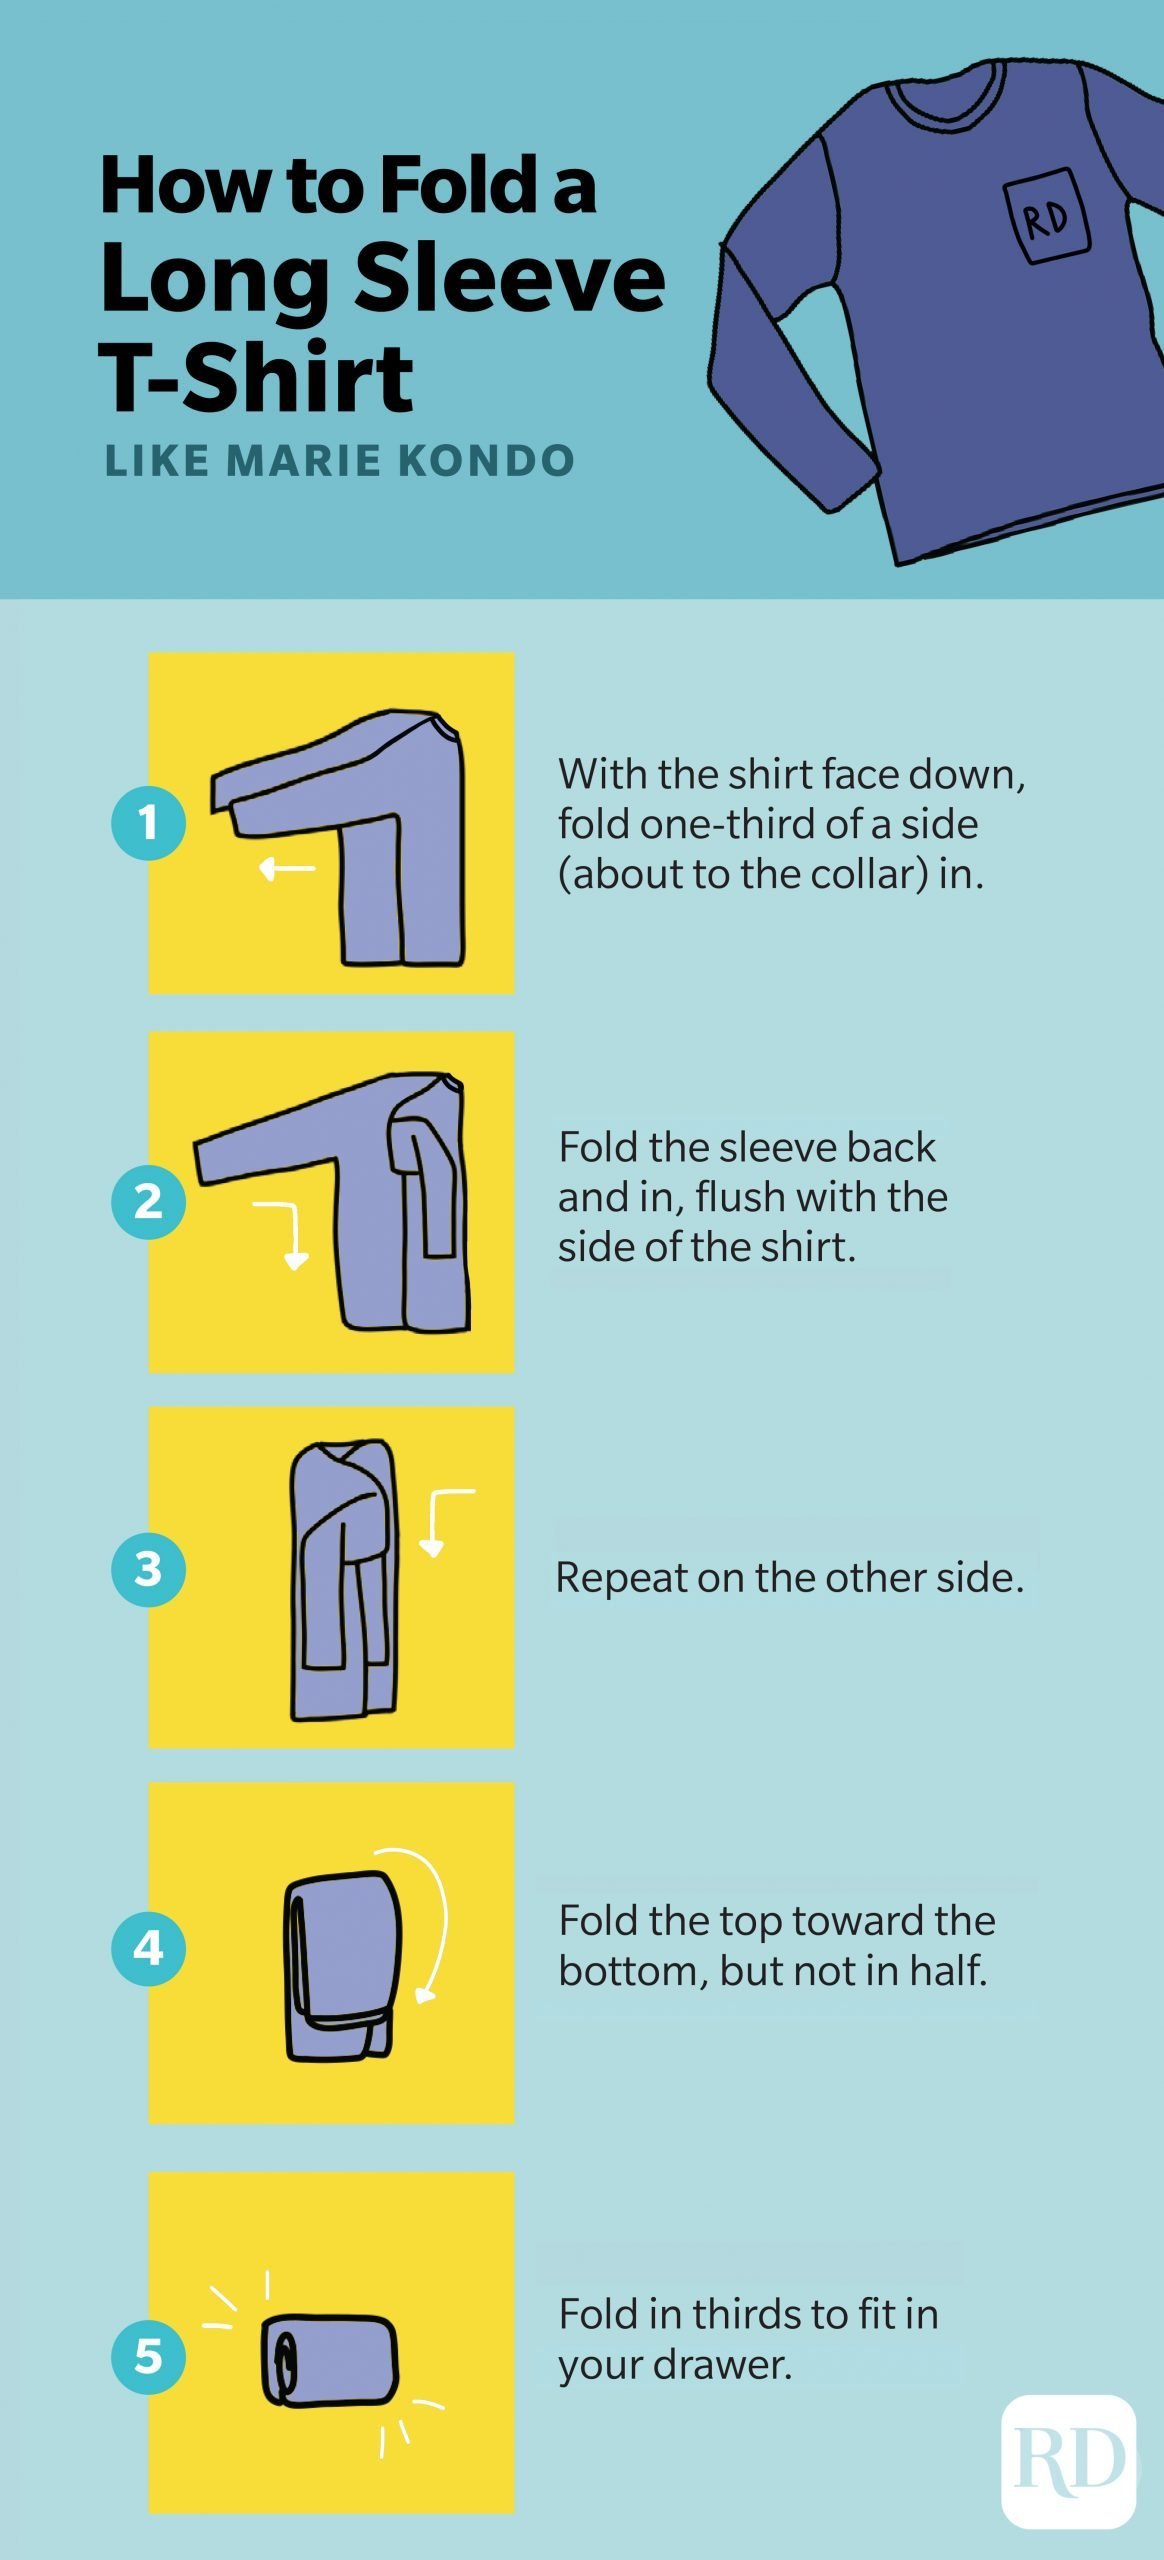 How to Fold a Long-Sleeve Shirt Four Ways